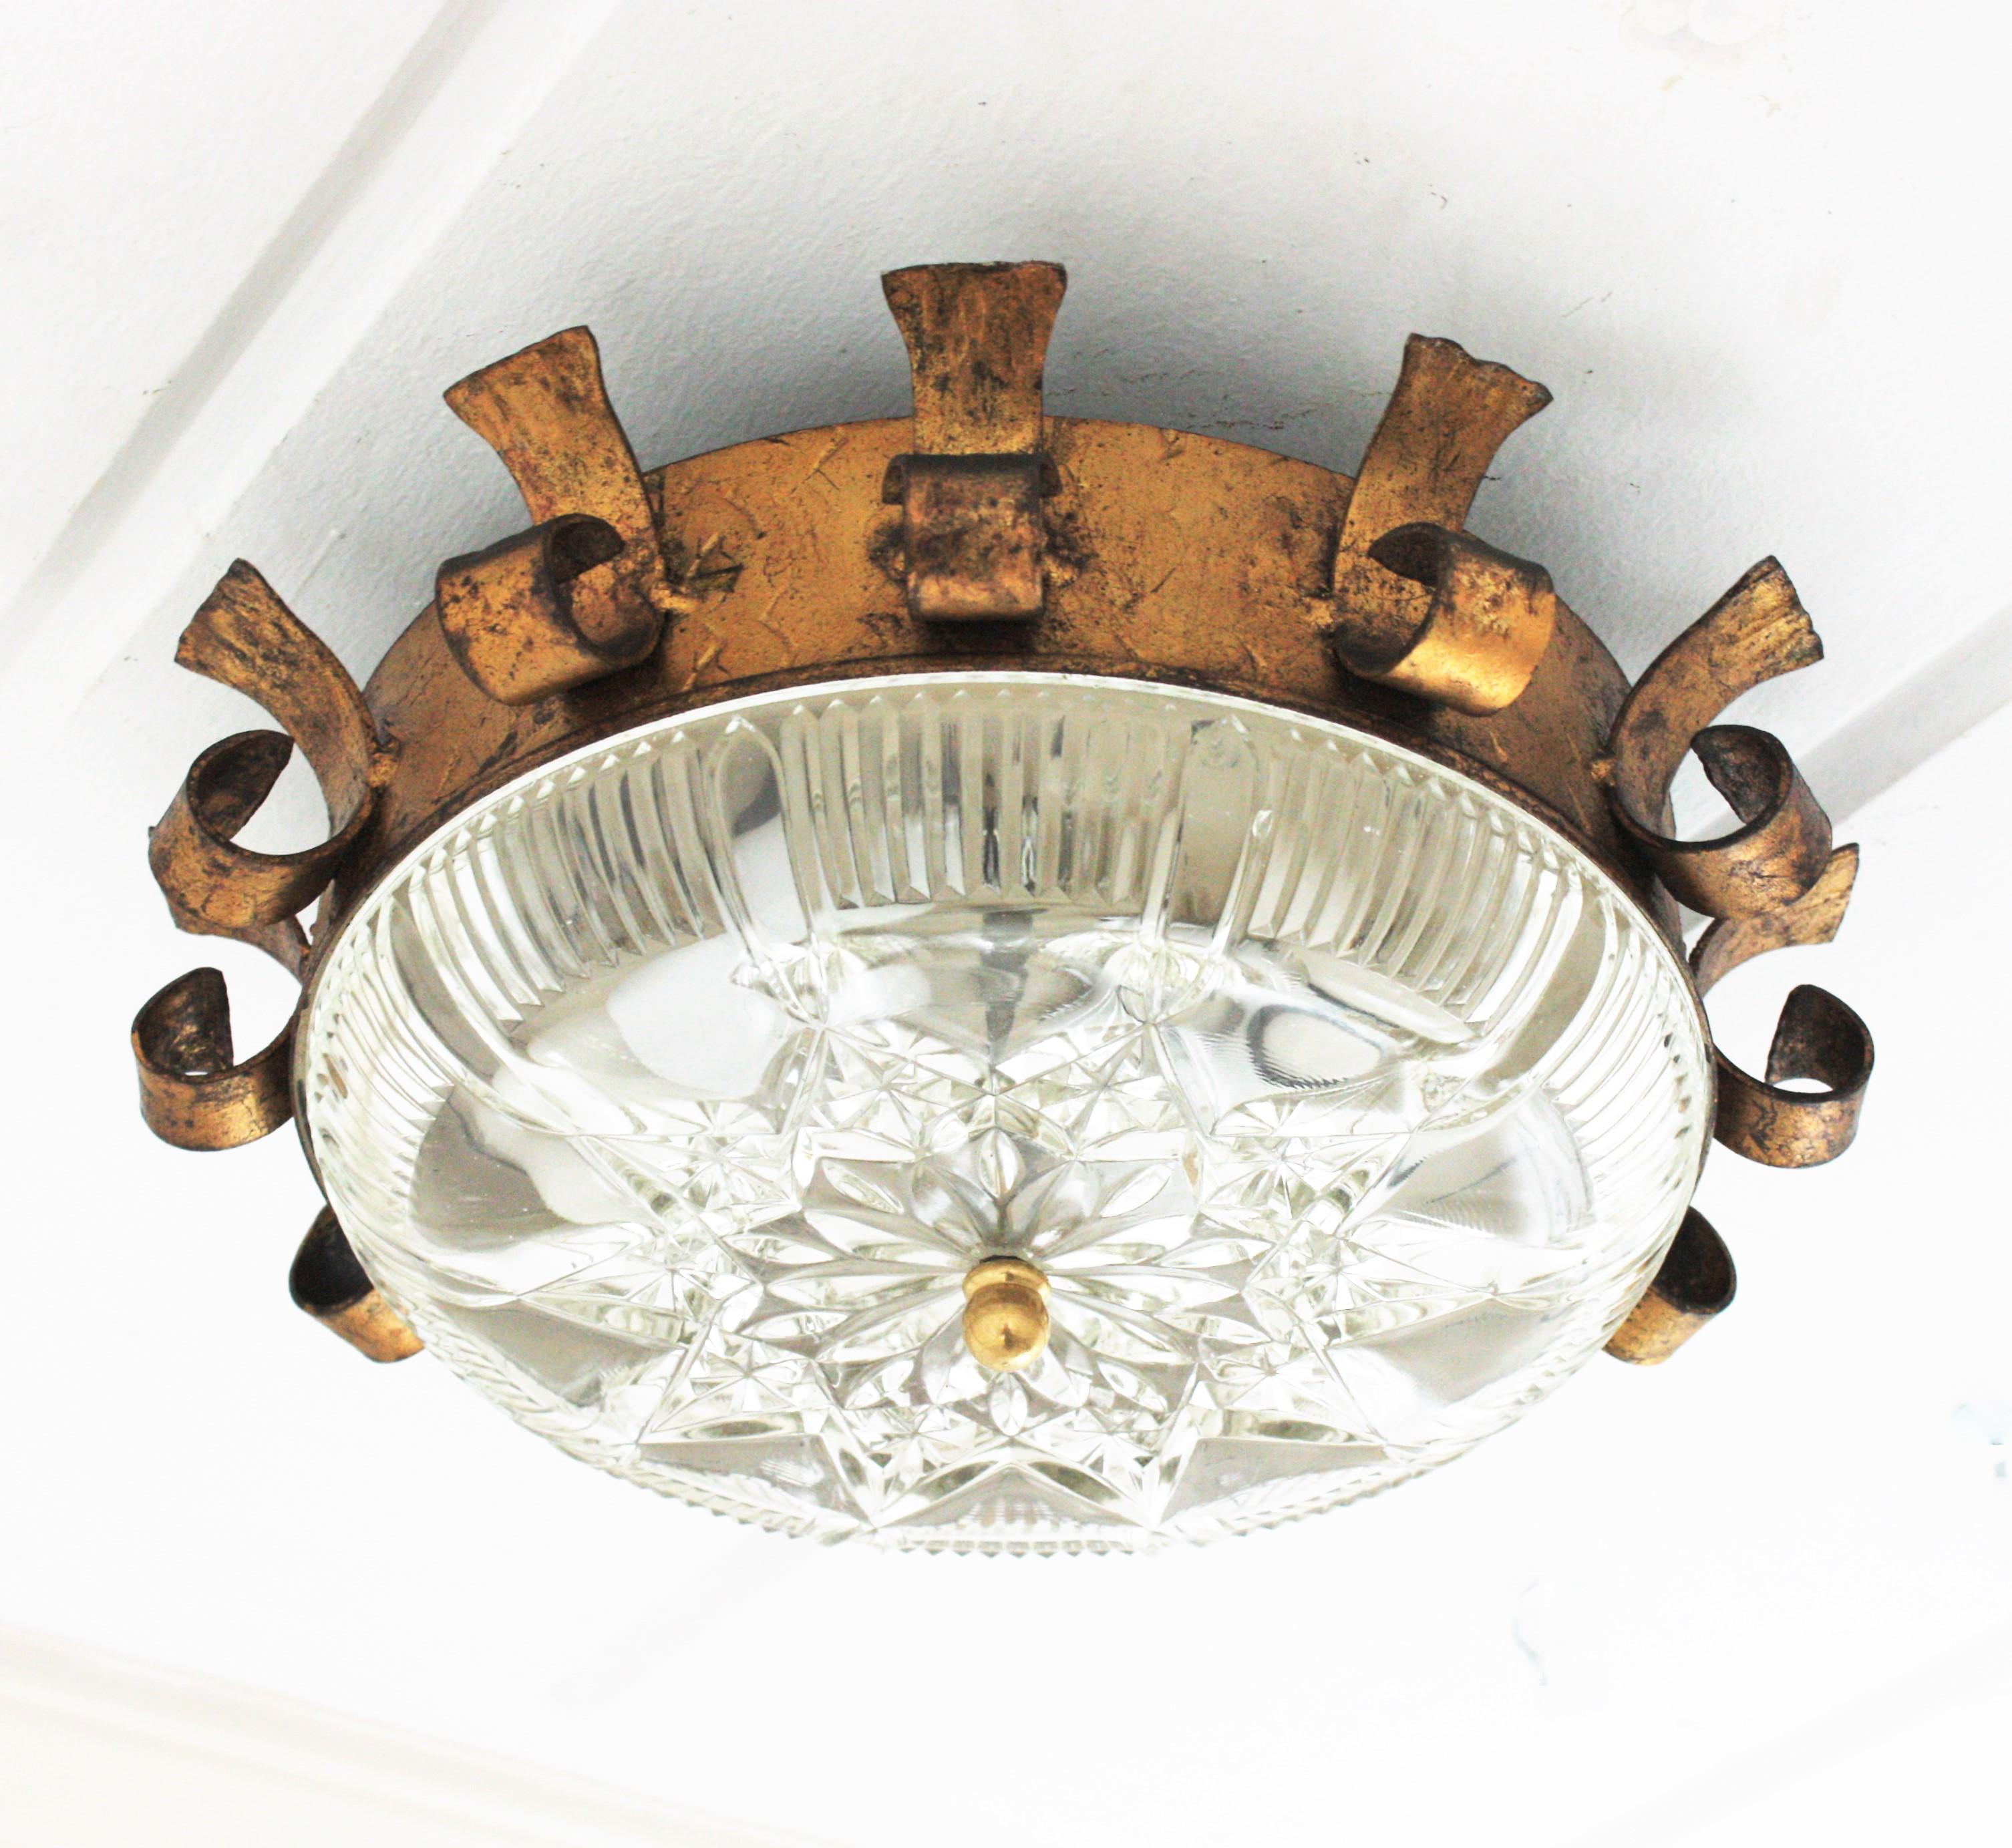 20th Century Sunburst Crown Light Fixture in Gilt Iron and Pressed Glass